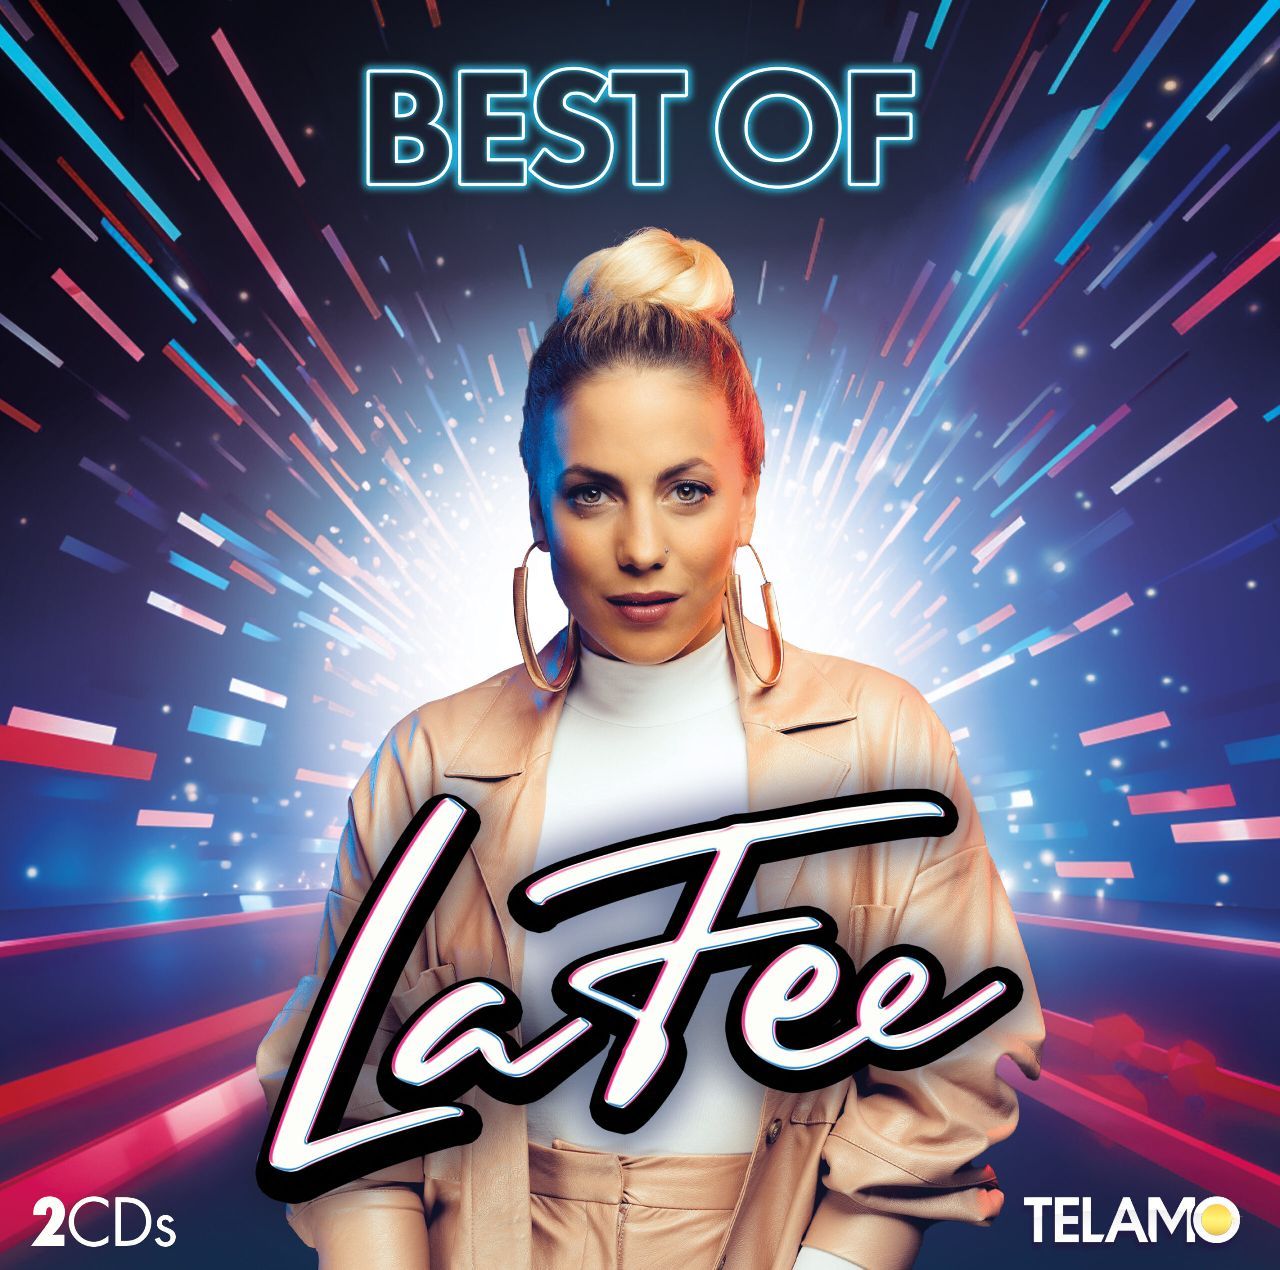 LaFee - Best Of